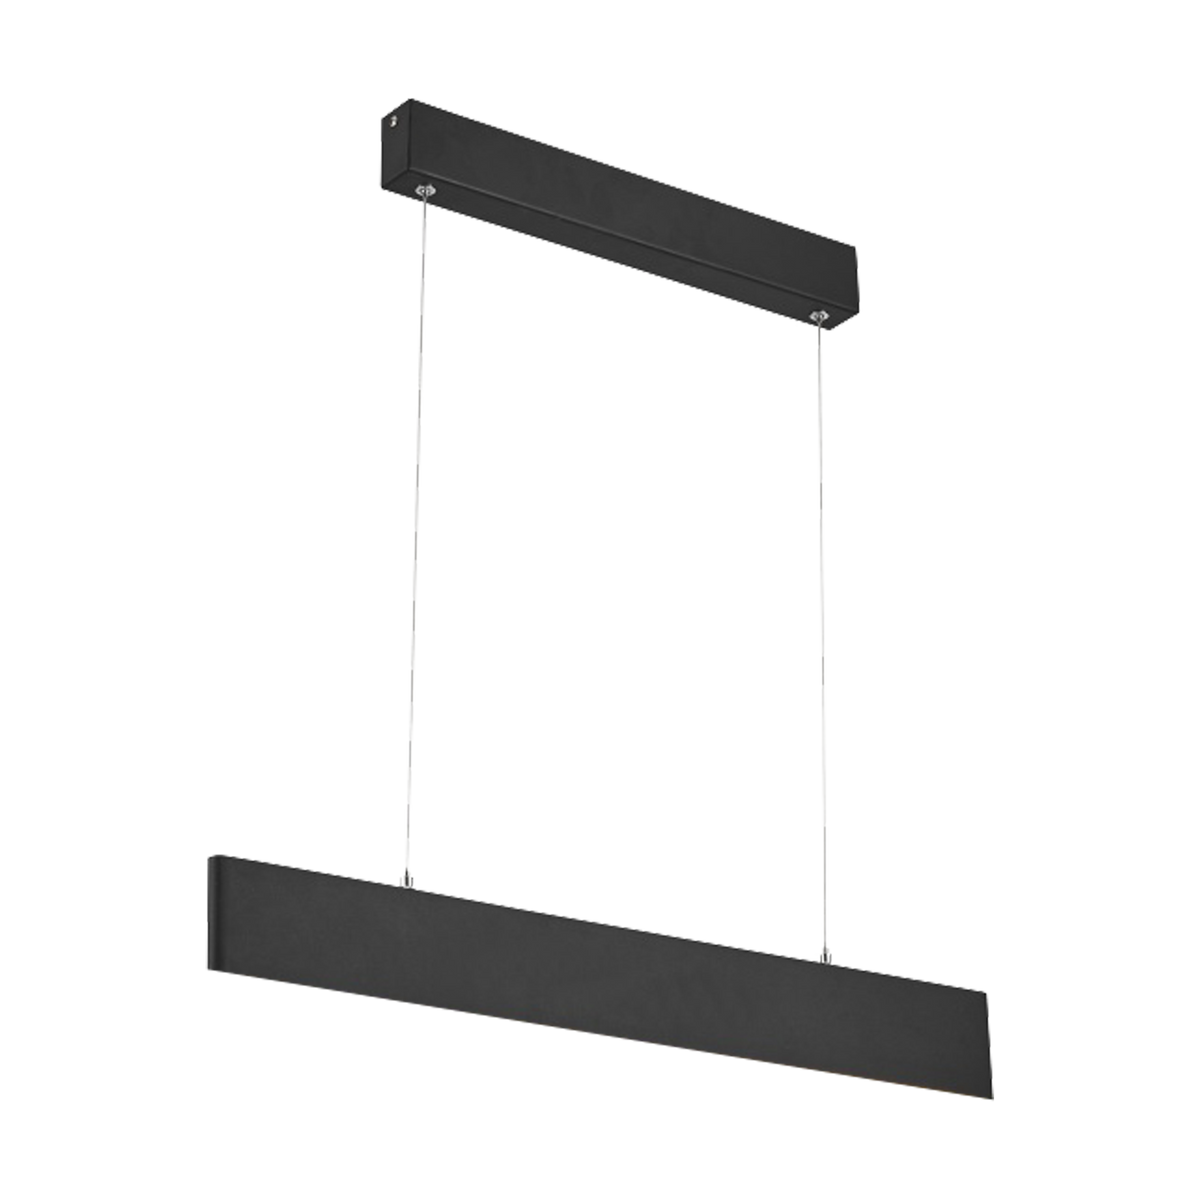 A black thin rectangular framed LED light Fixture.